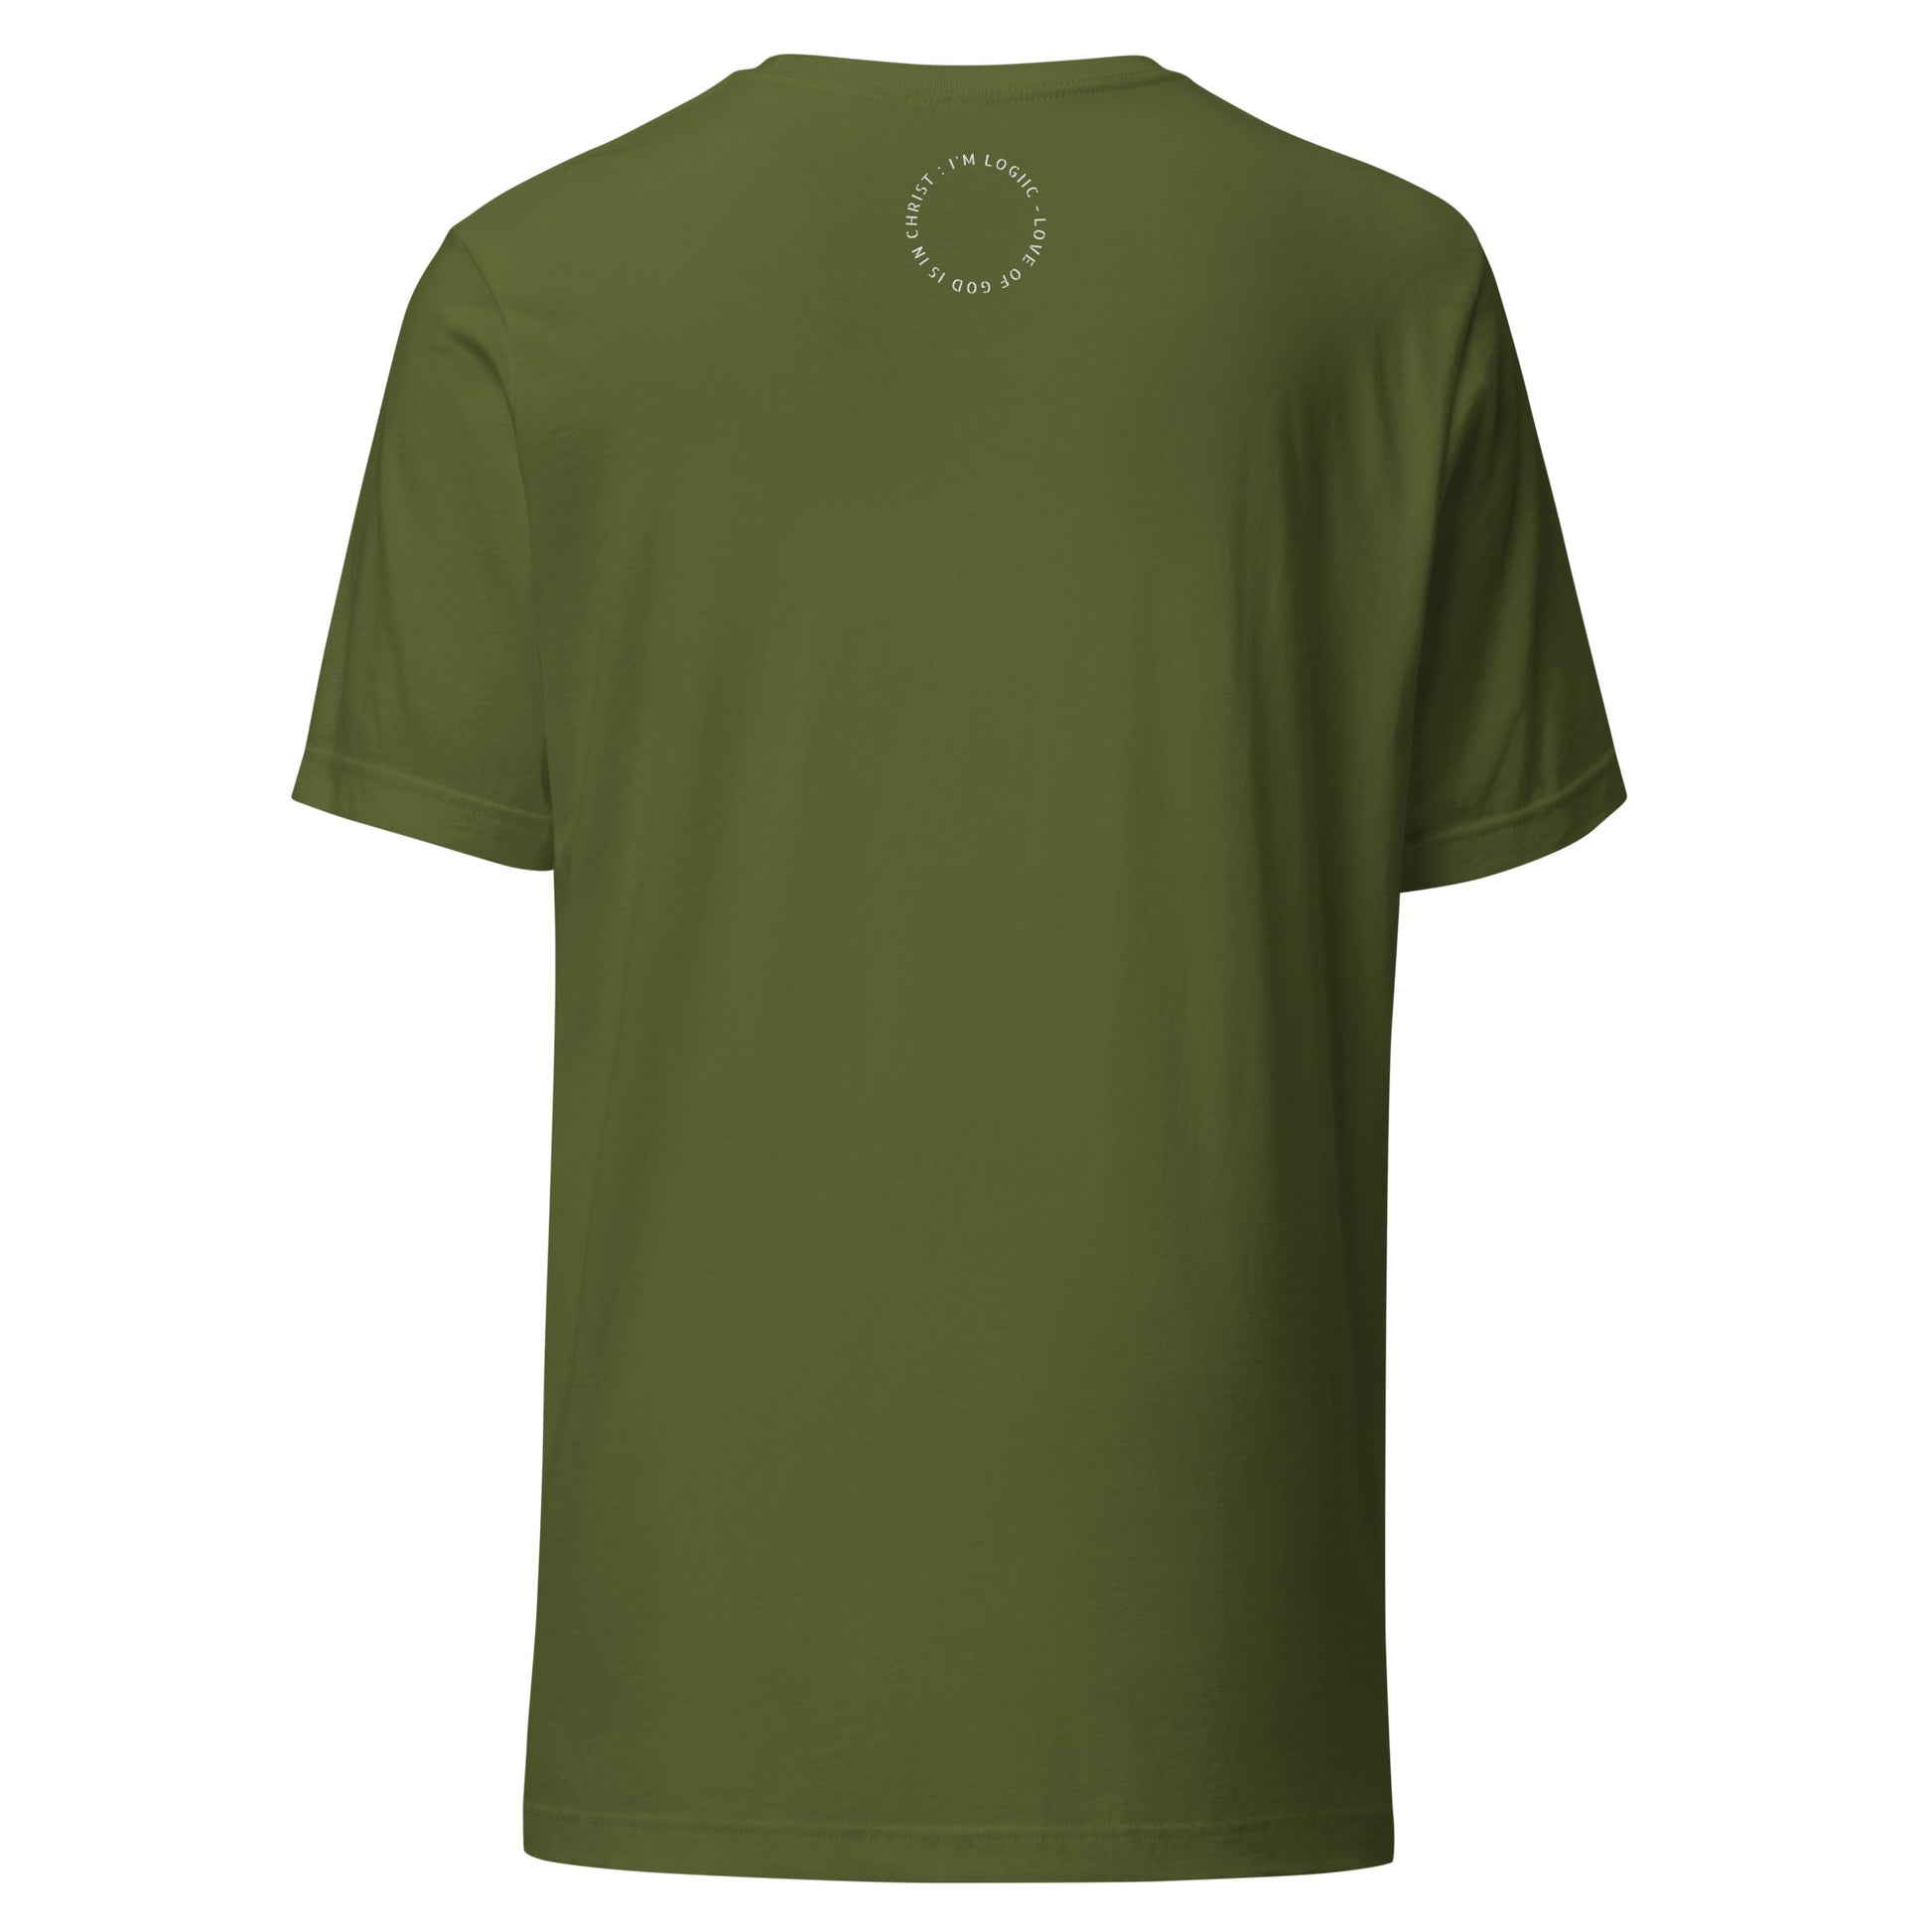 Praise Hands Unisex t-shirt - Olive / S - Shirts & Tops